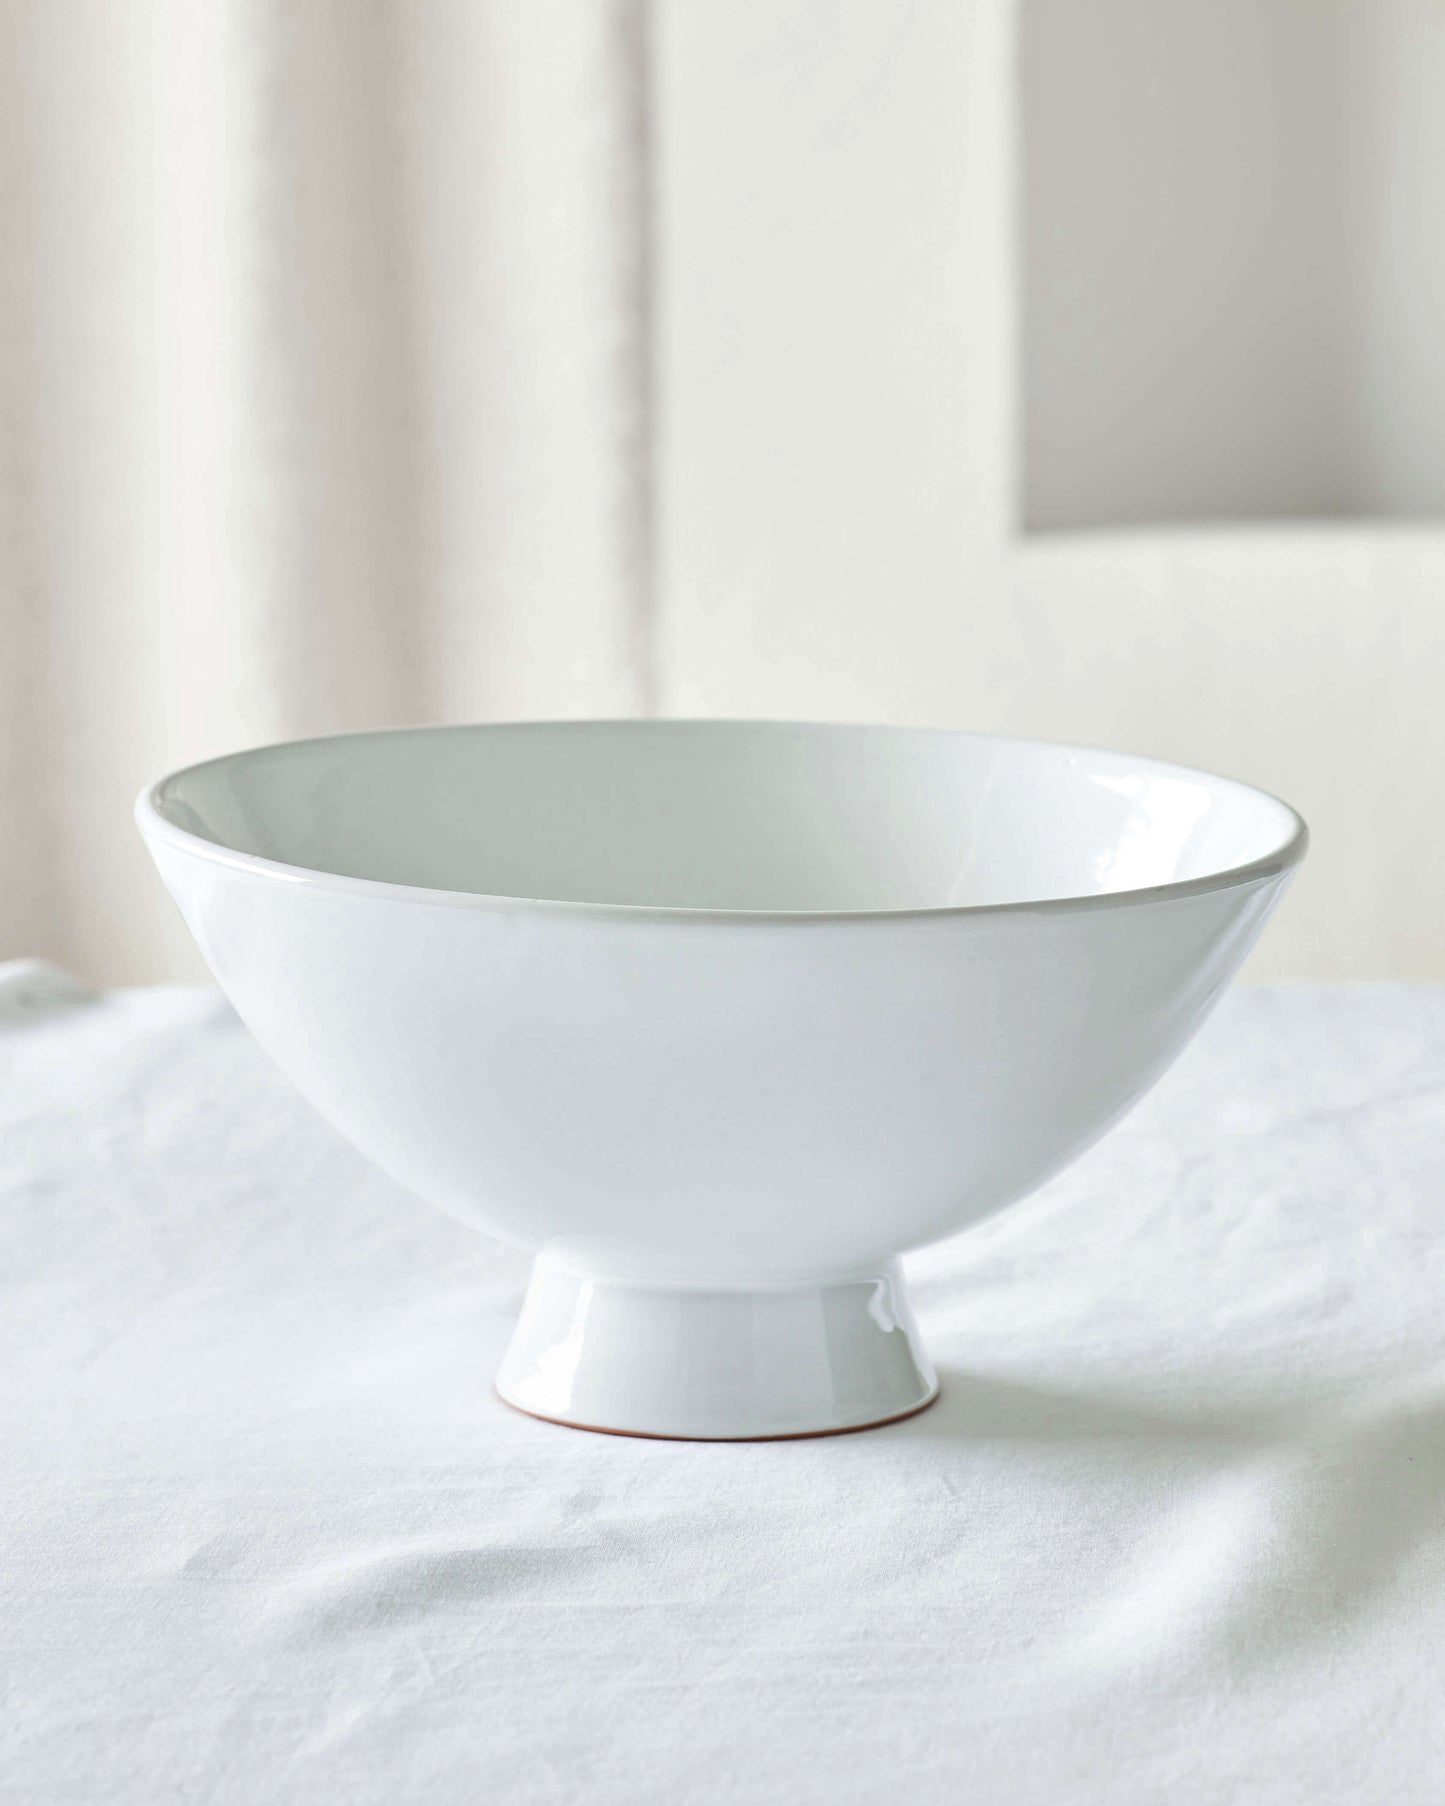 White glossy Rami Pedestal Bowl by Fairkind.